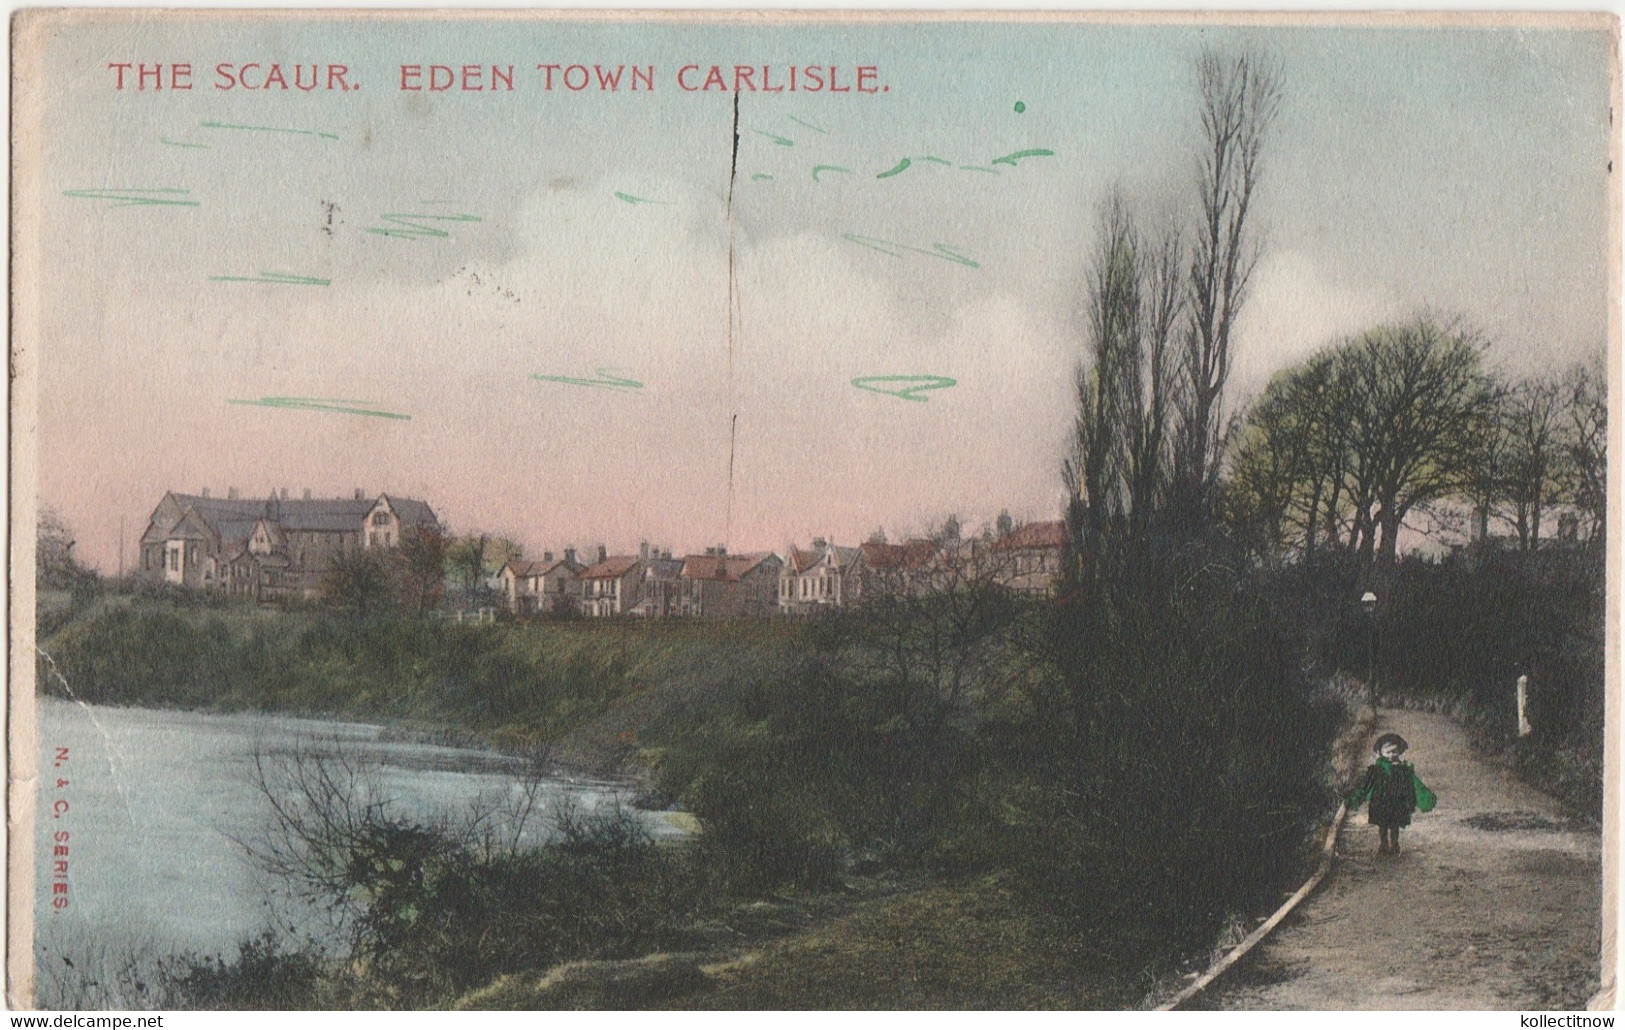 CARLISLE - THE SCAUR - EDEN TOWN CARLISLE - 1904 - Carlisle